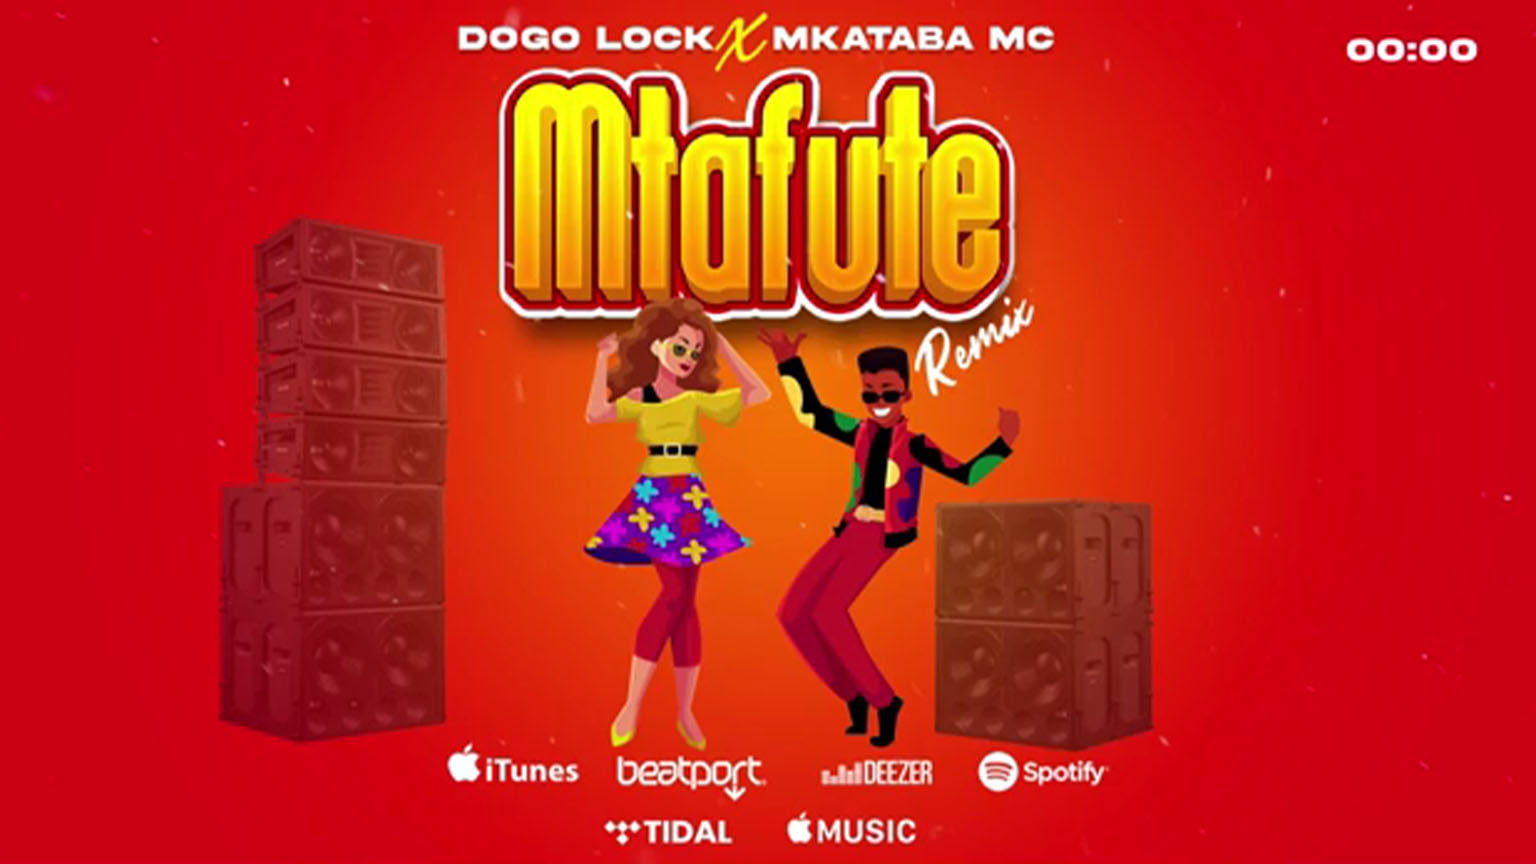 Download Audio Mp3 | Dogo Lock Ft. Mkataba Mc – Mtafute Remix